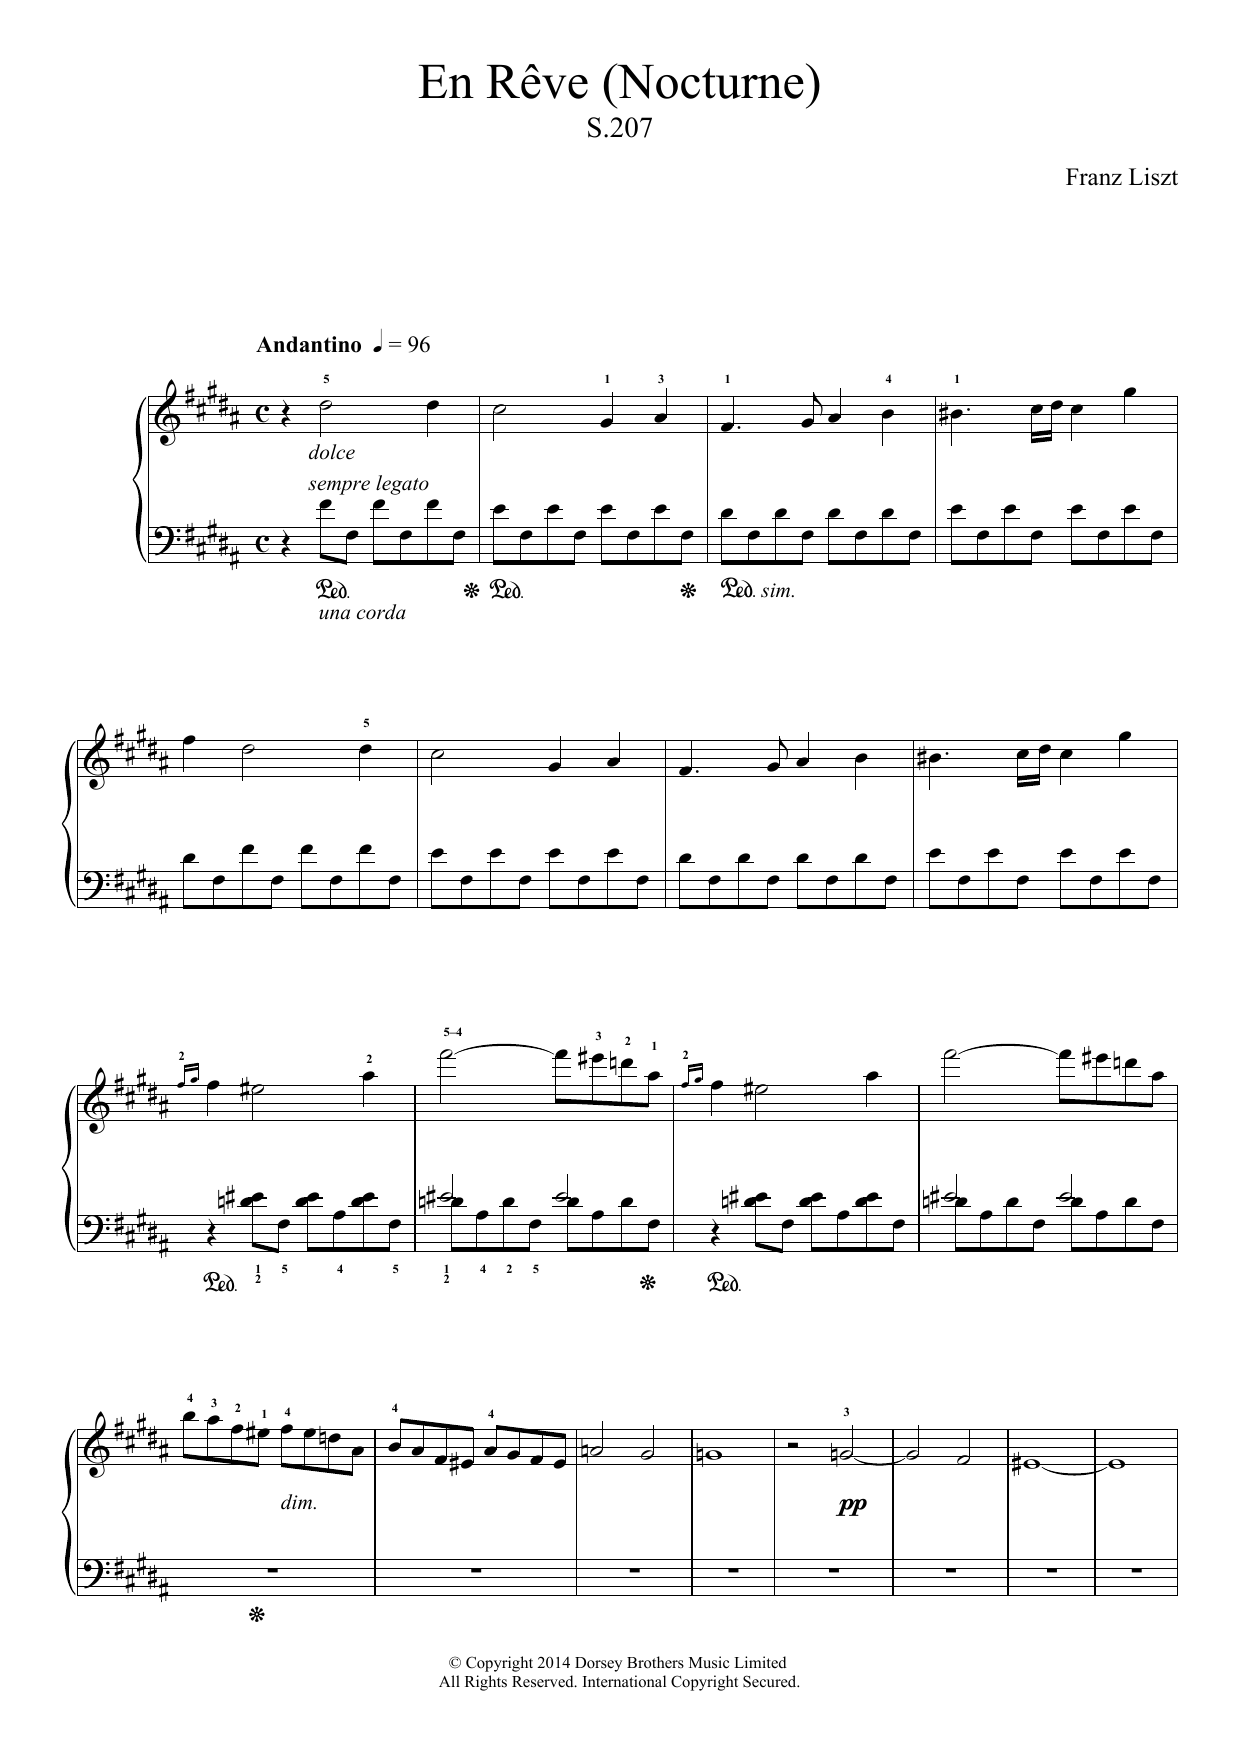 Franz Liszt En Reve (Nocturne) Sheet Music Notes & Chords for Piano - Download or Print PDF